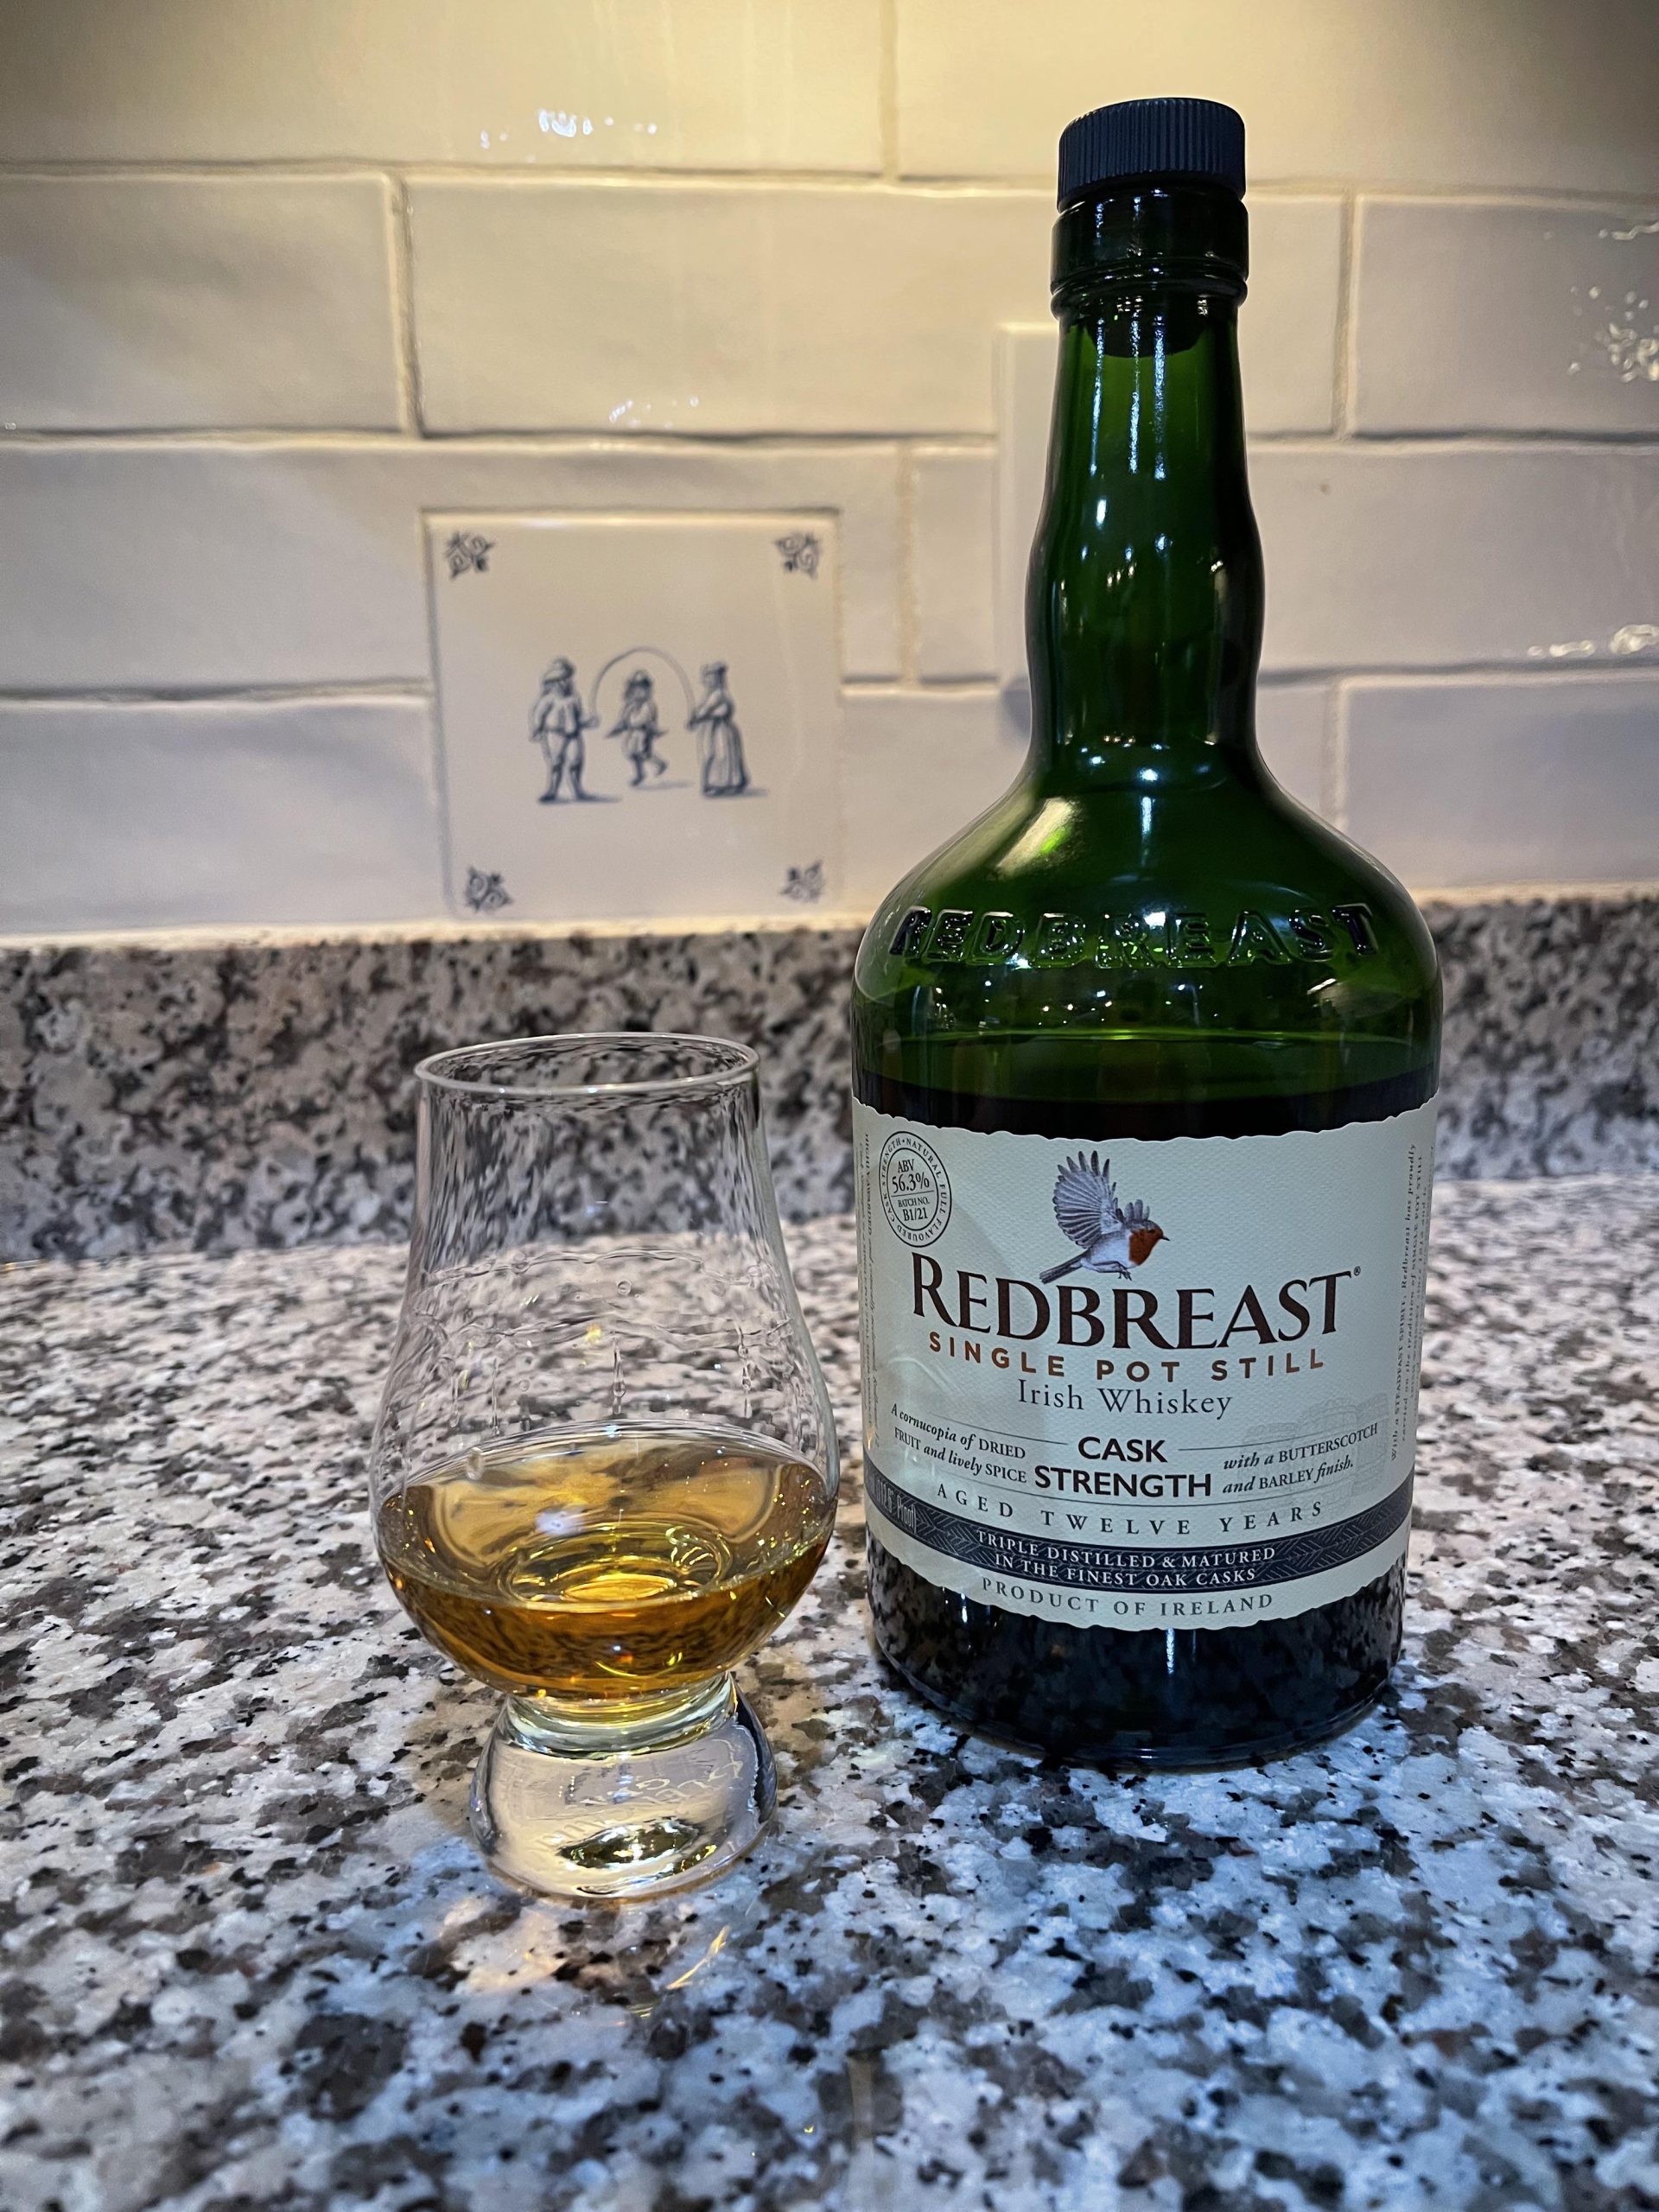 Brestino rosso 12 anni whisky irlandese 750ml